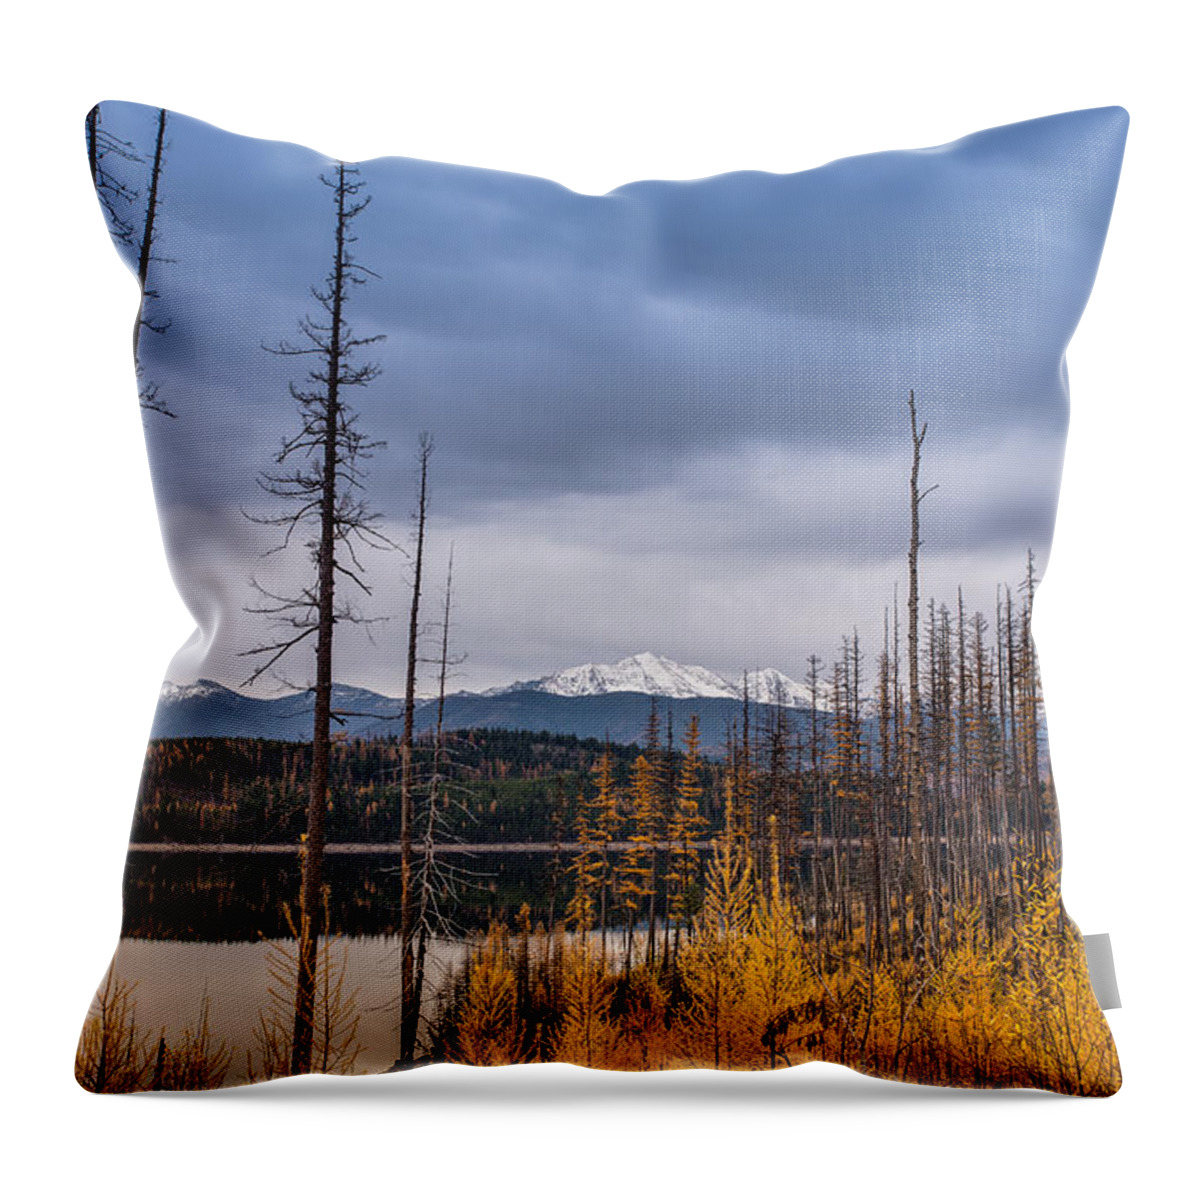 Flathead National Forest Throw Pillow featuring the photograph Flathead National Forest by Adam Mateo Fierro